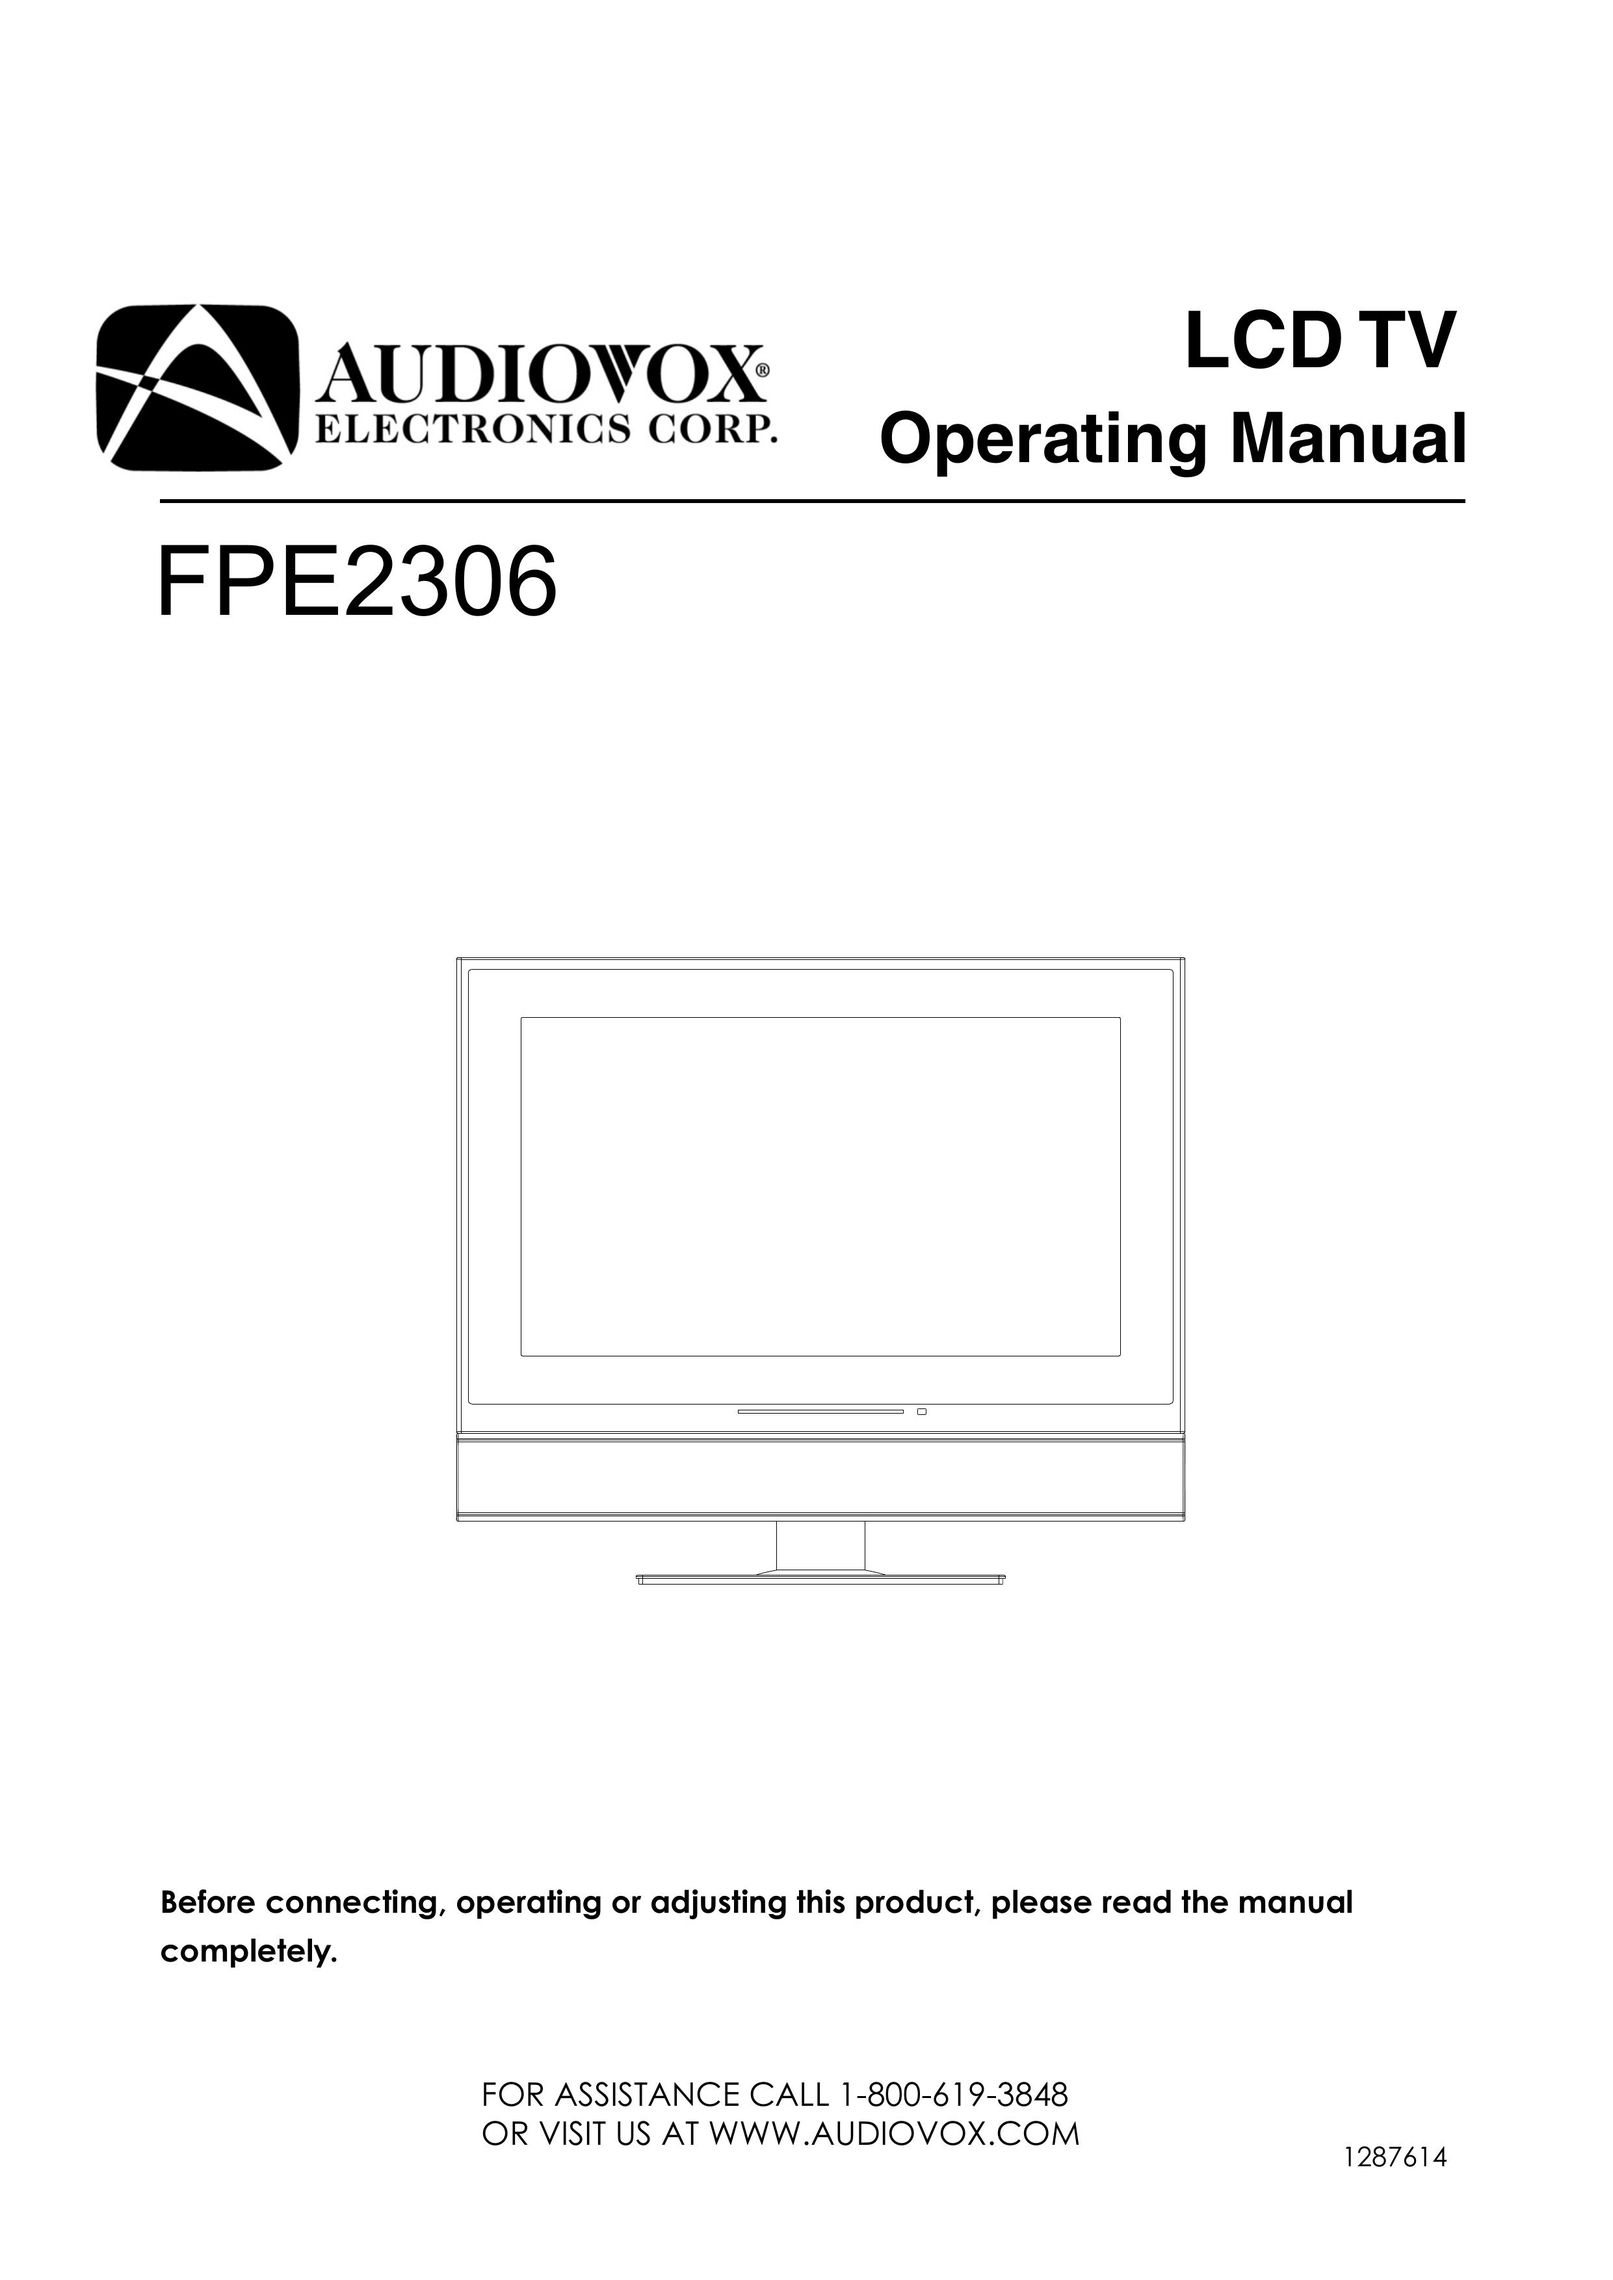 Audiovox FPE2306 Flat Panel Television User Manual